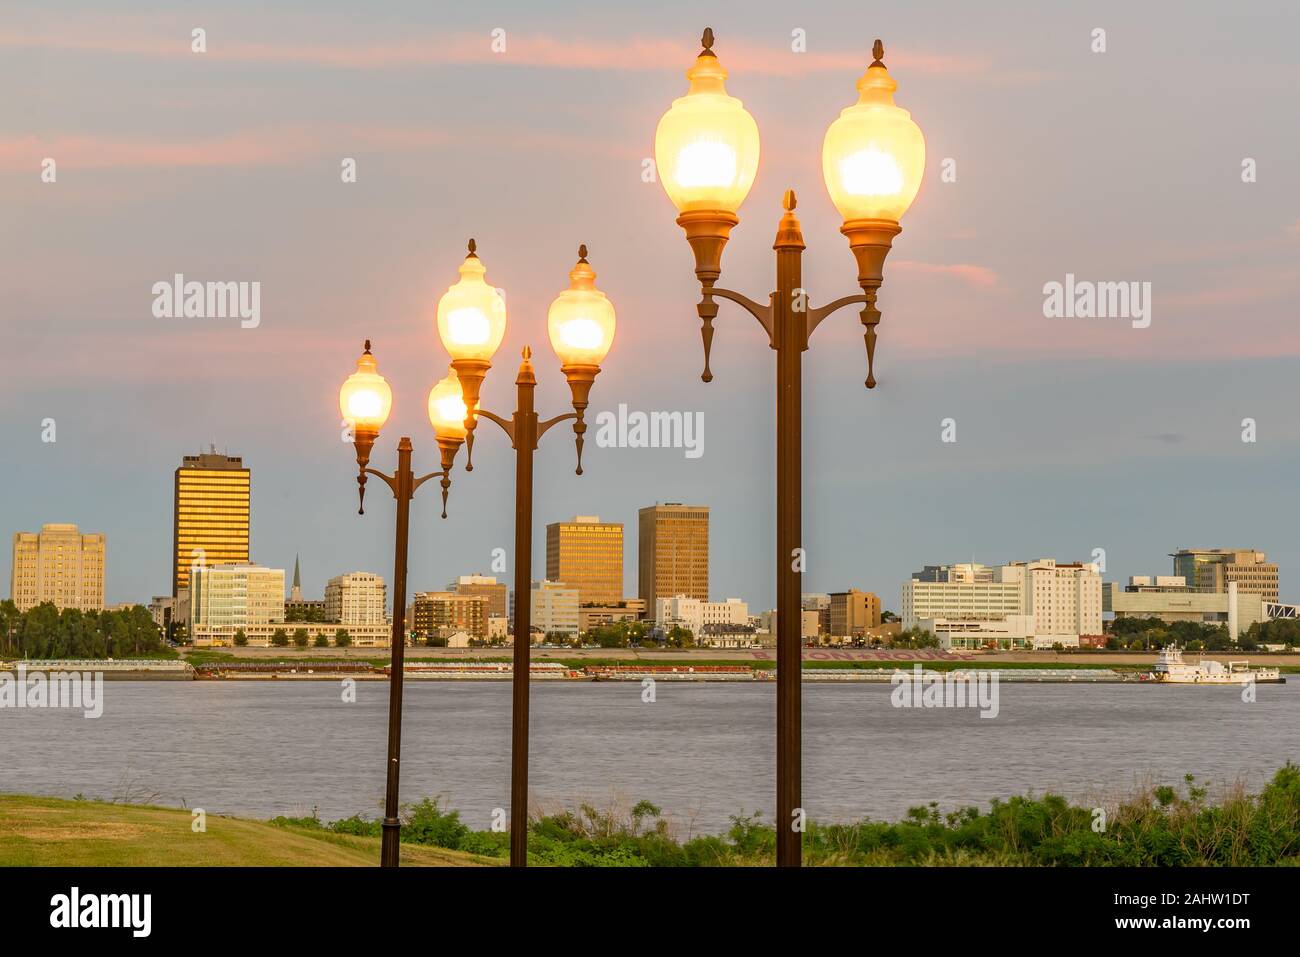 Baton Rouge, Louisiana city skyline along the Mississippi River Stock Photo